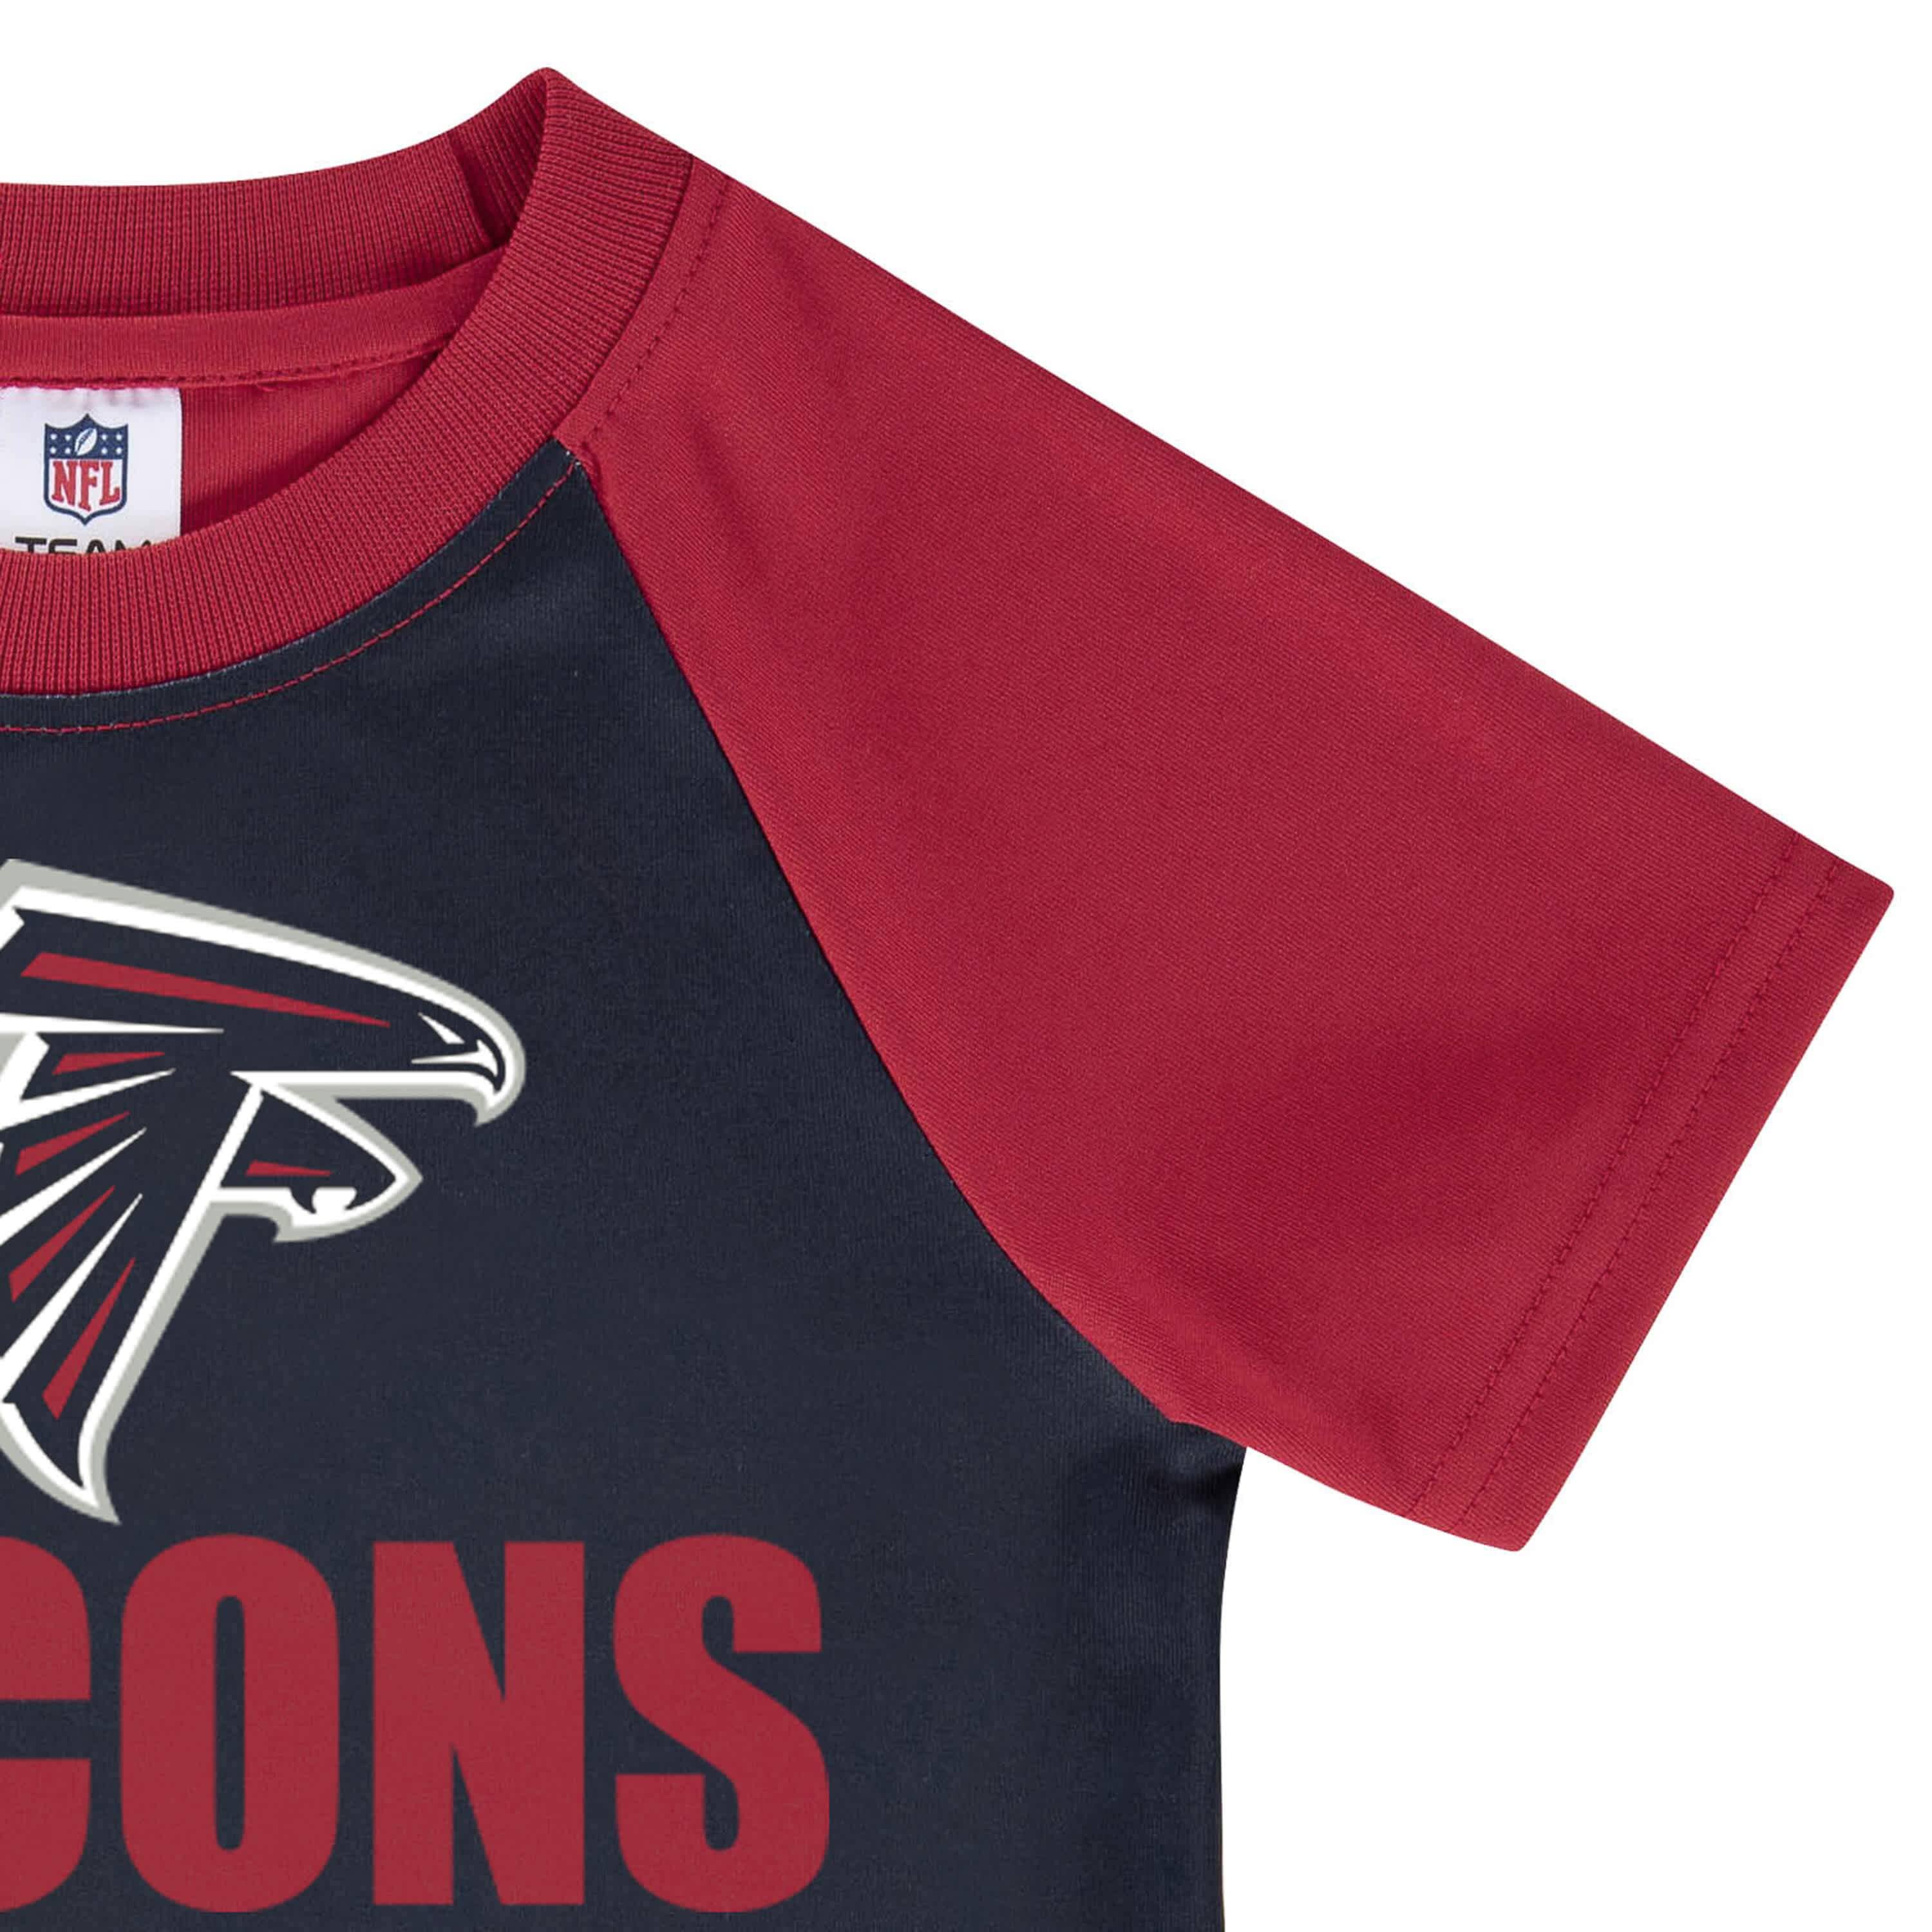 Atlanta Falcons kids jersey